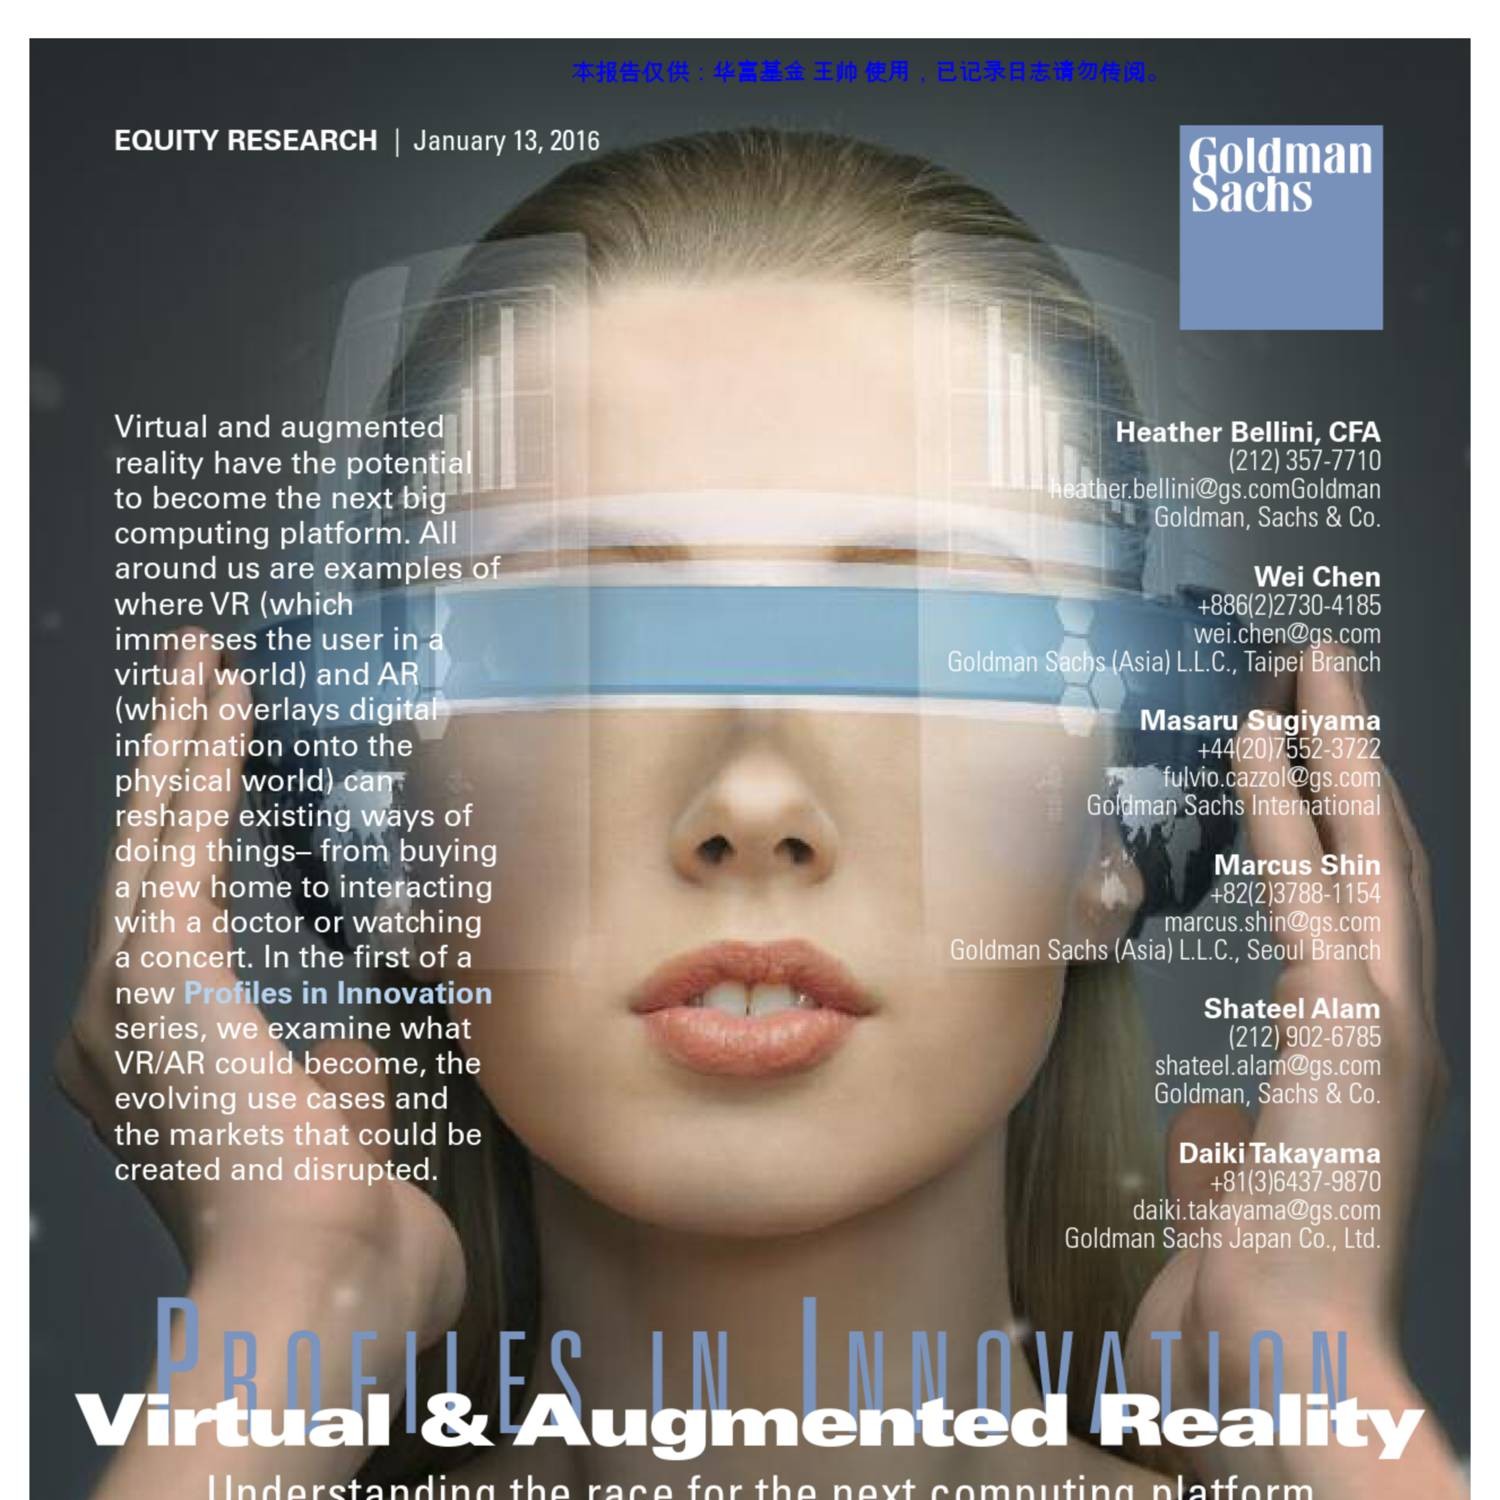 Goldman Sachs Augmented & Virtual Reality.pdf DocDroid